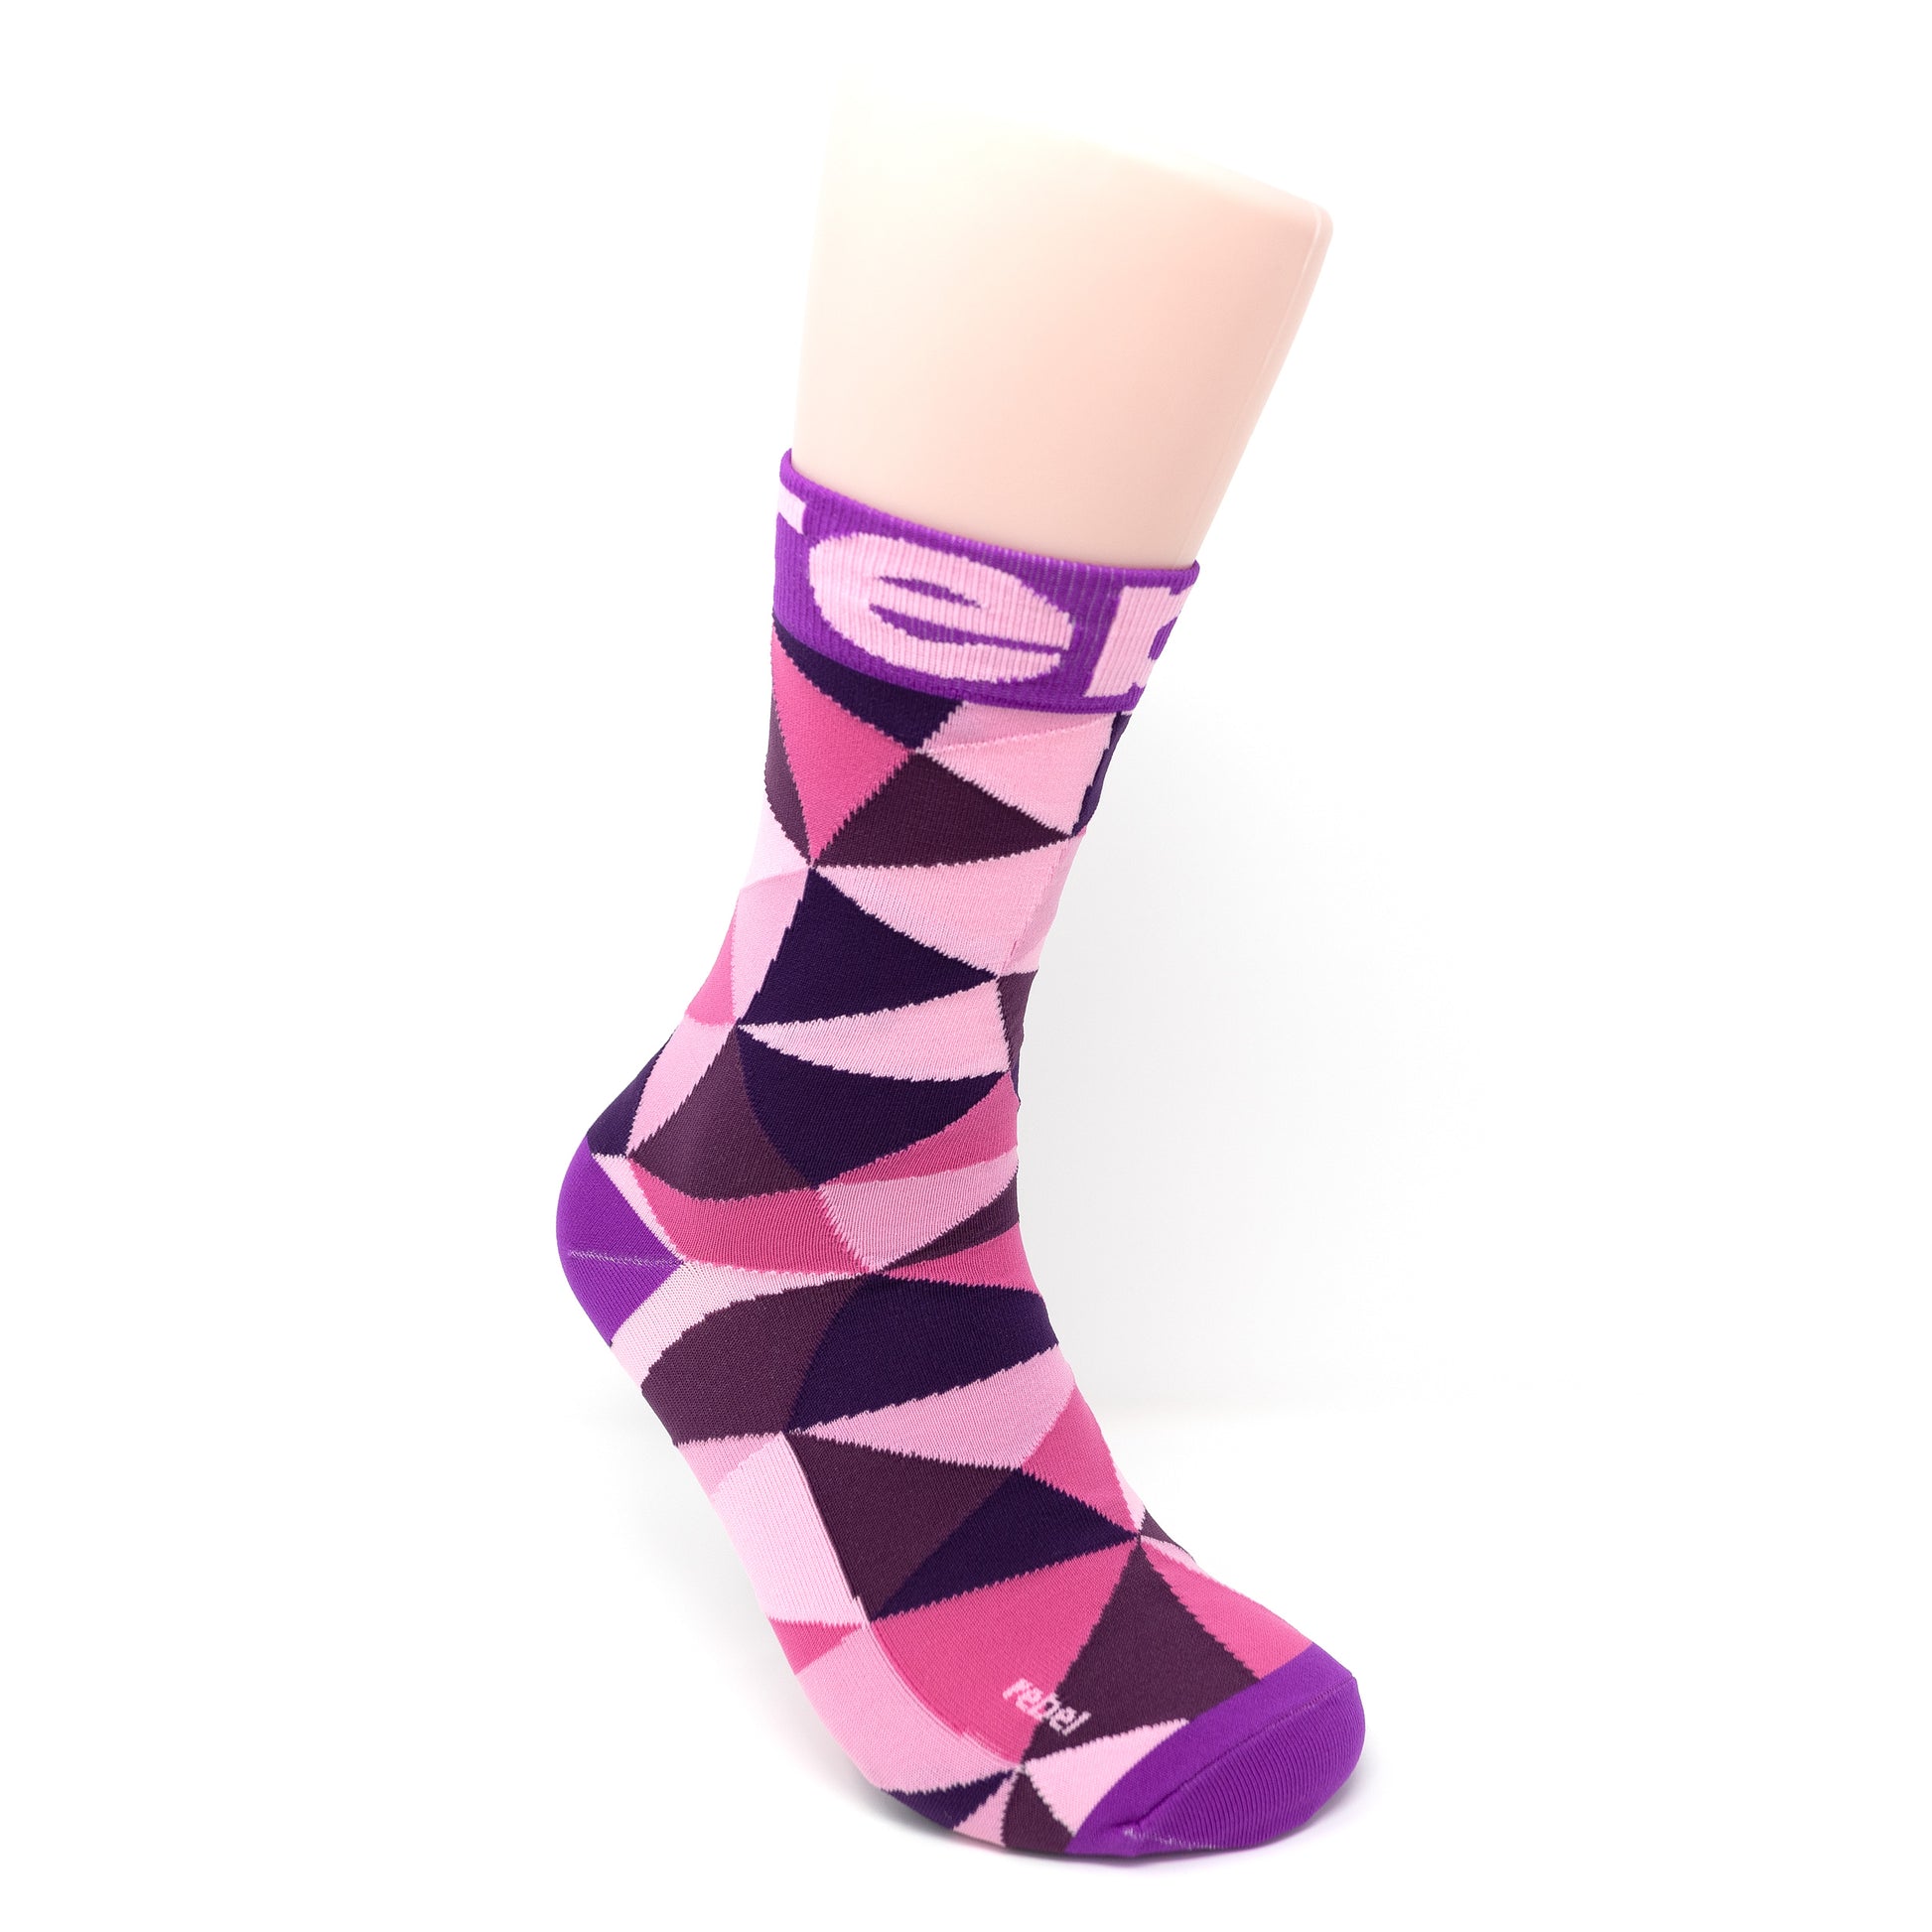 Rebel Fashion's Dress Purple Socks